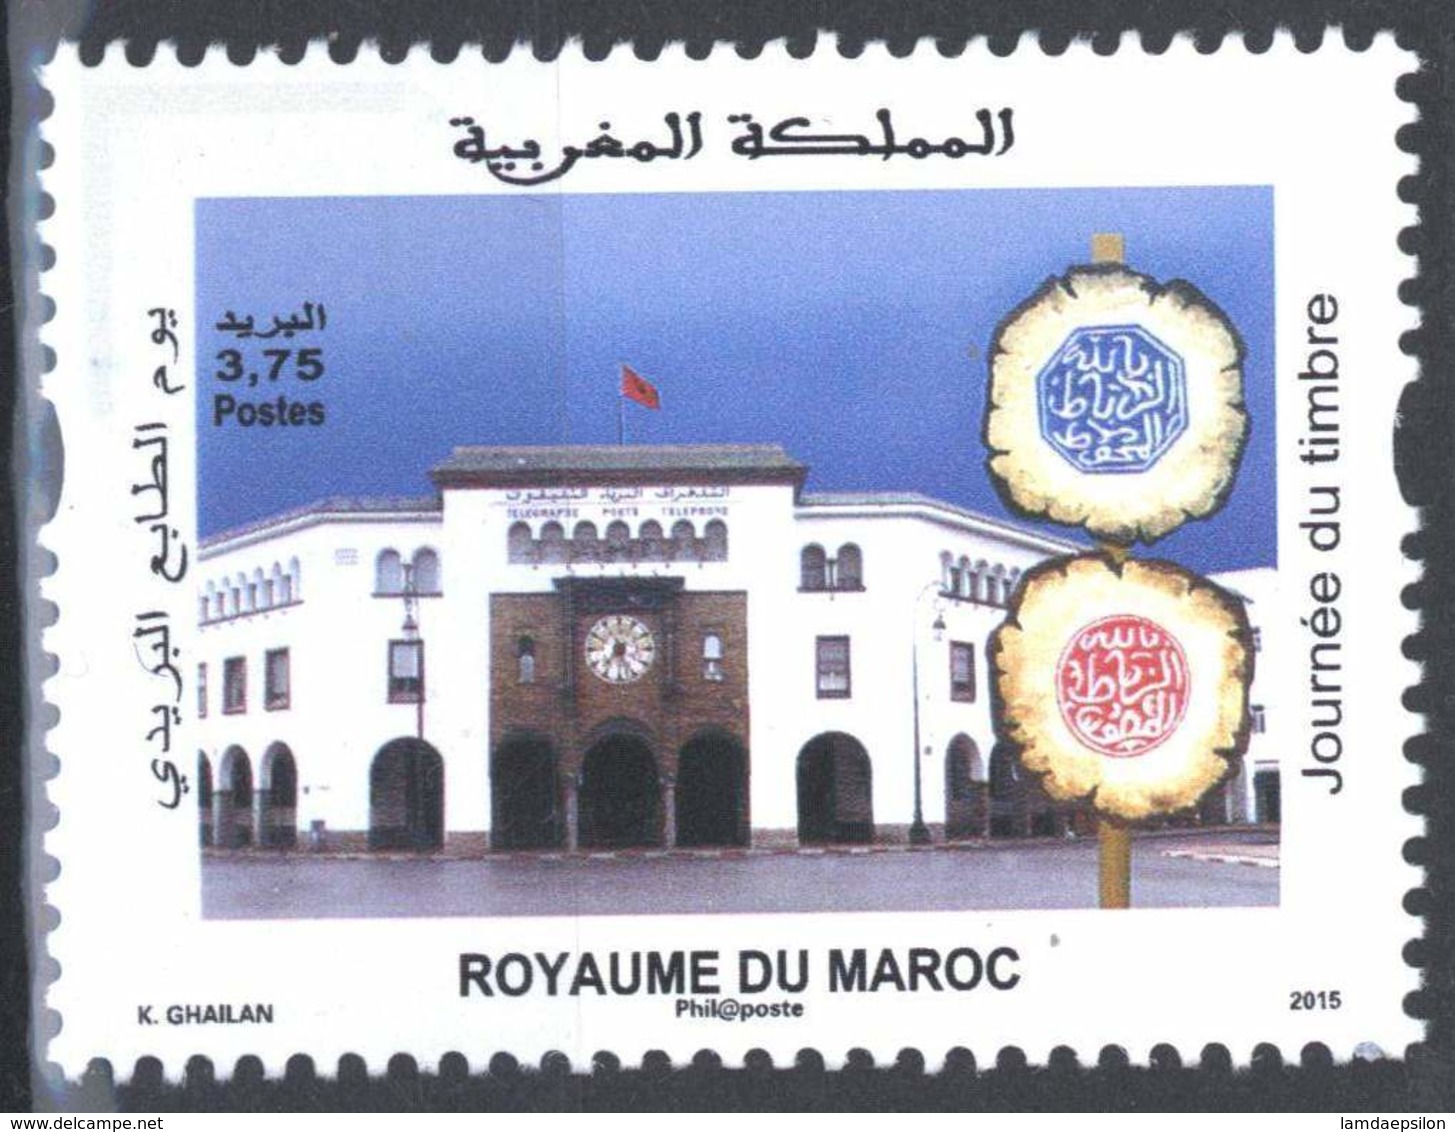 MOROCCO STAMP DAY JOURNEE DU TIMBRE LA POSTE 2015 - Morocco (1956-...)